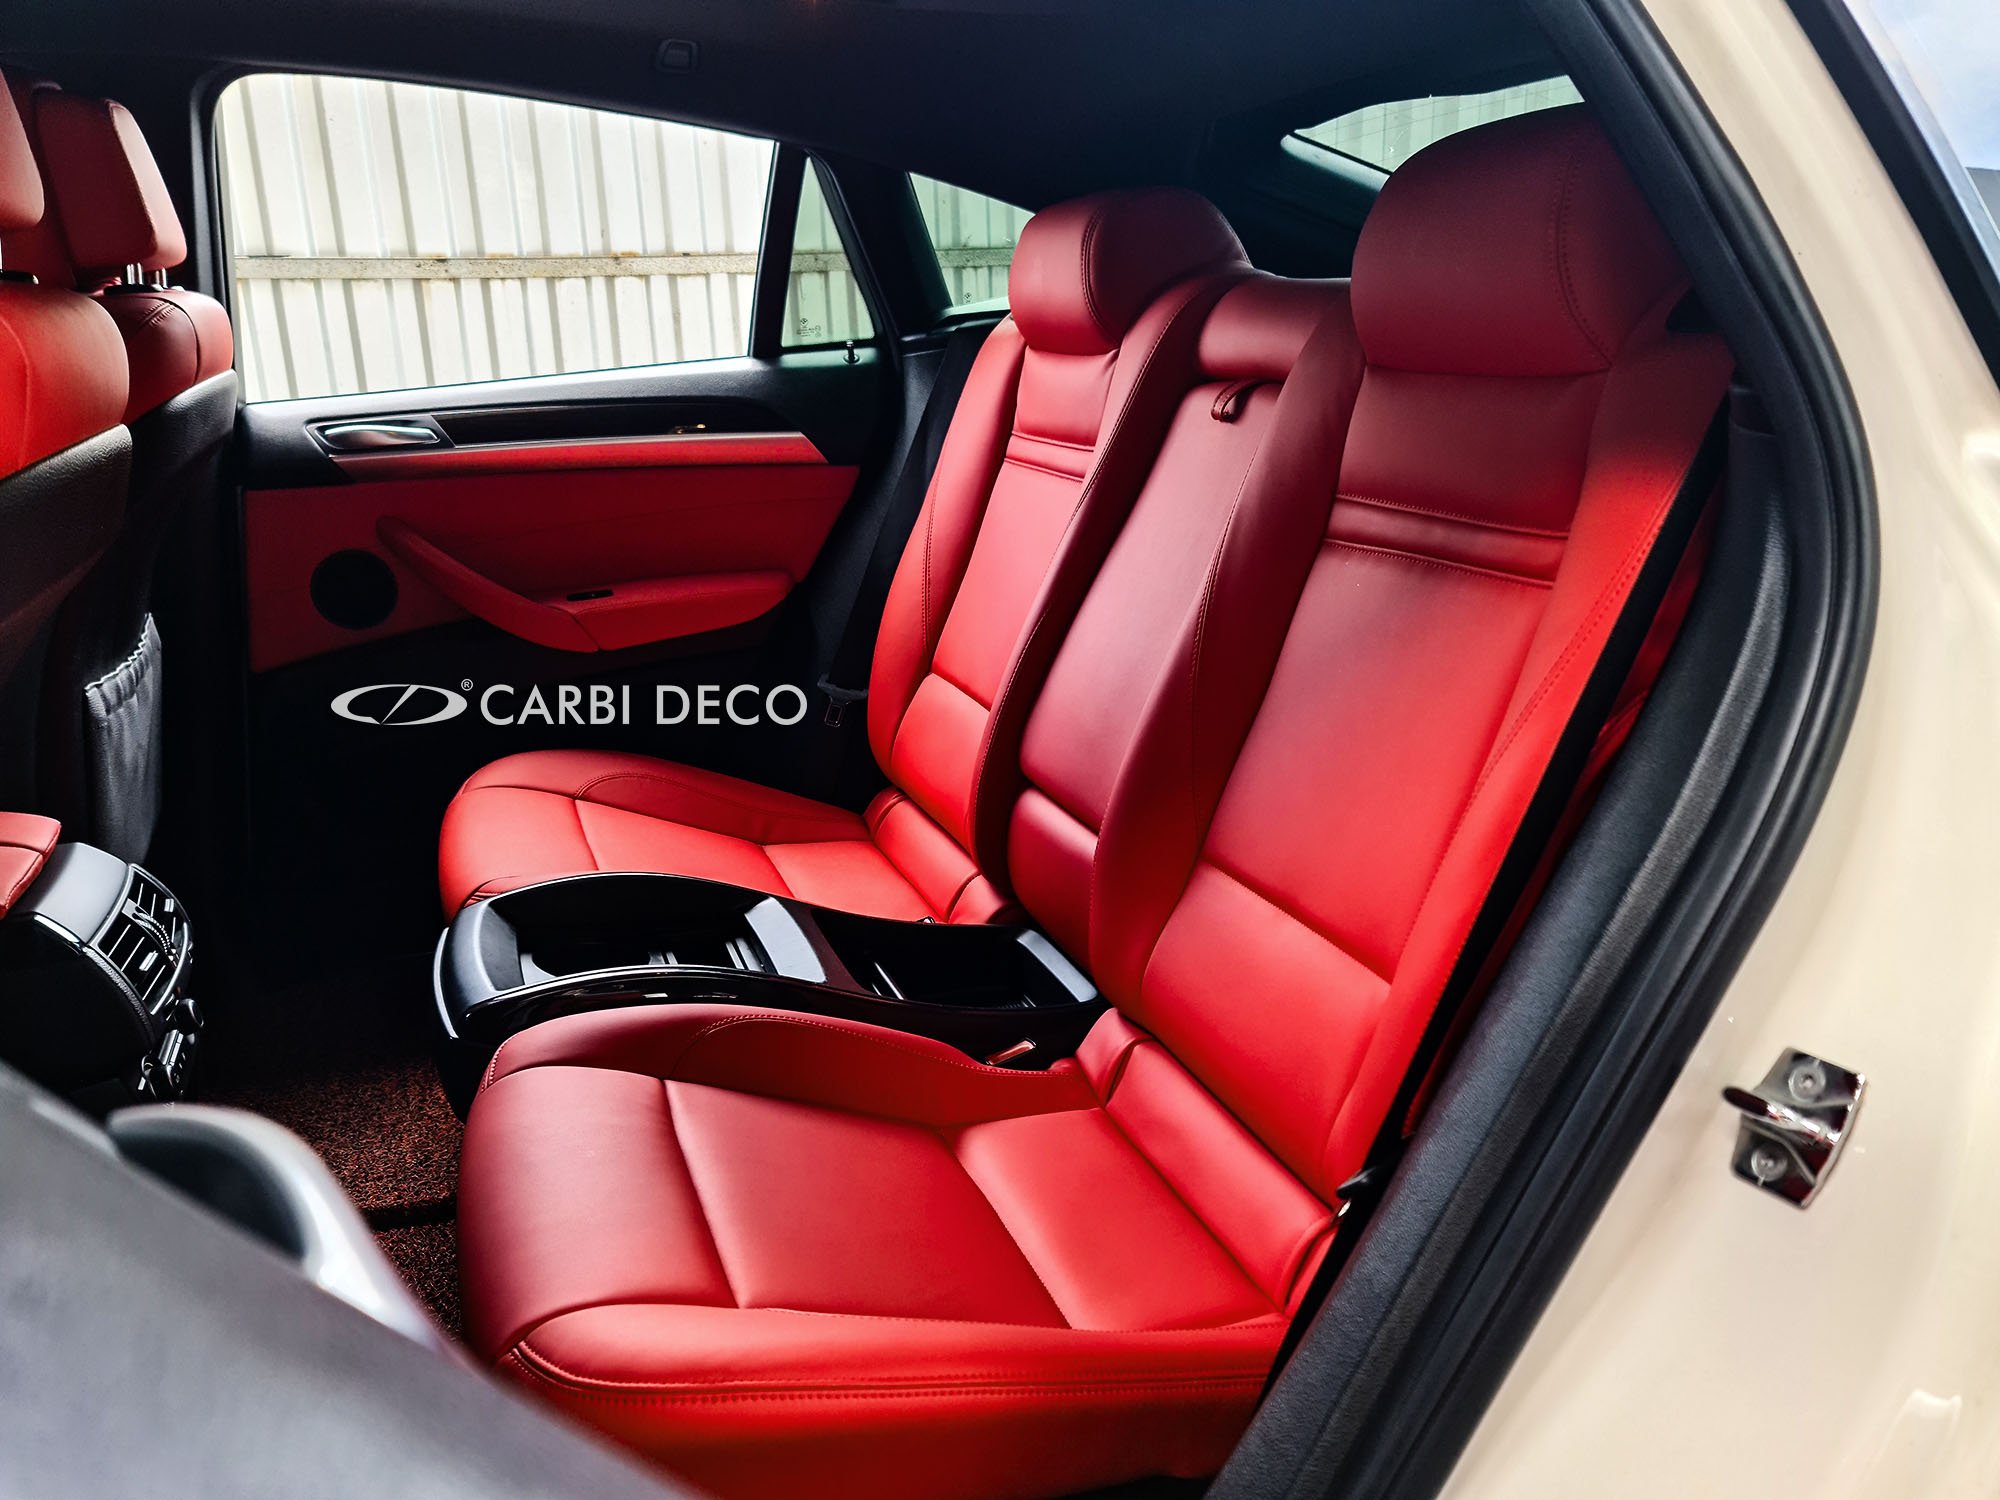 RED LEATHER PLASTIC CAR SEAT HEADREST HOOK HANGER FITS BMW X6 E71 E72 07-14